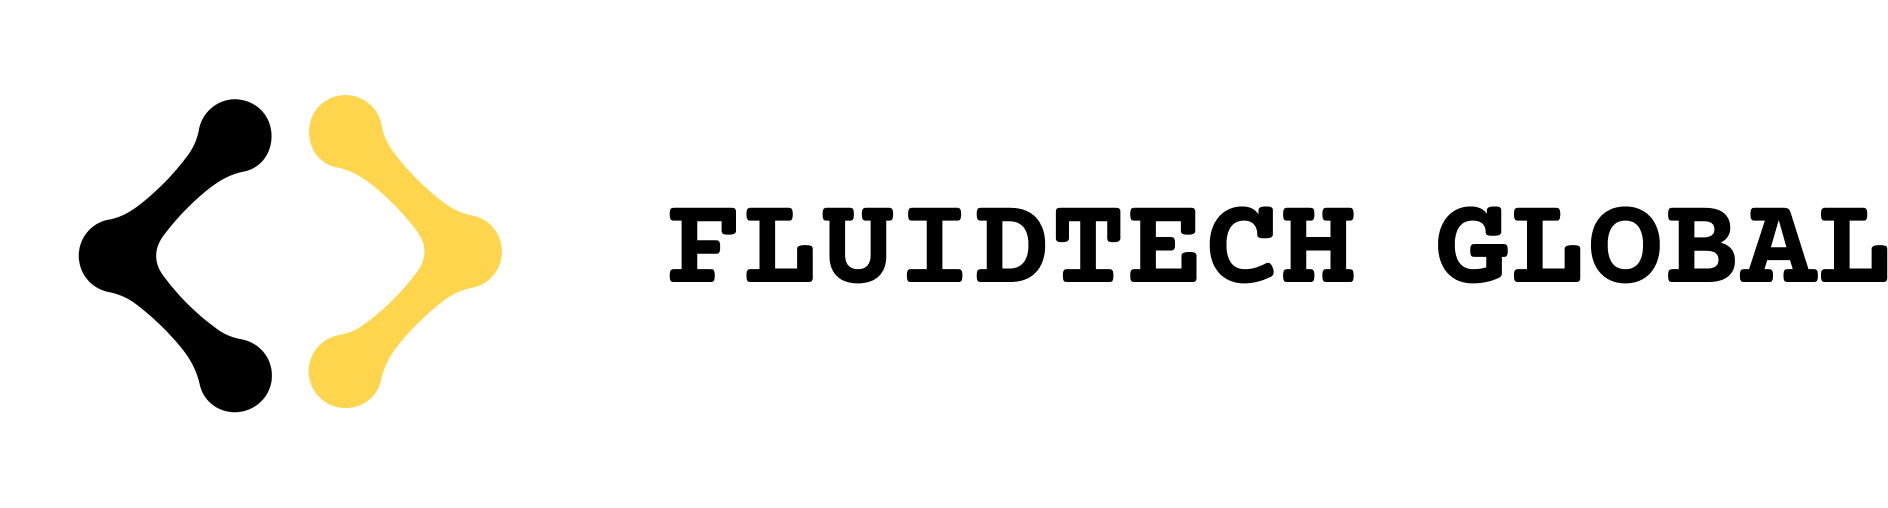 Fluid Tech Global logo